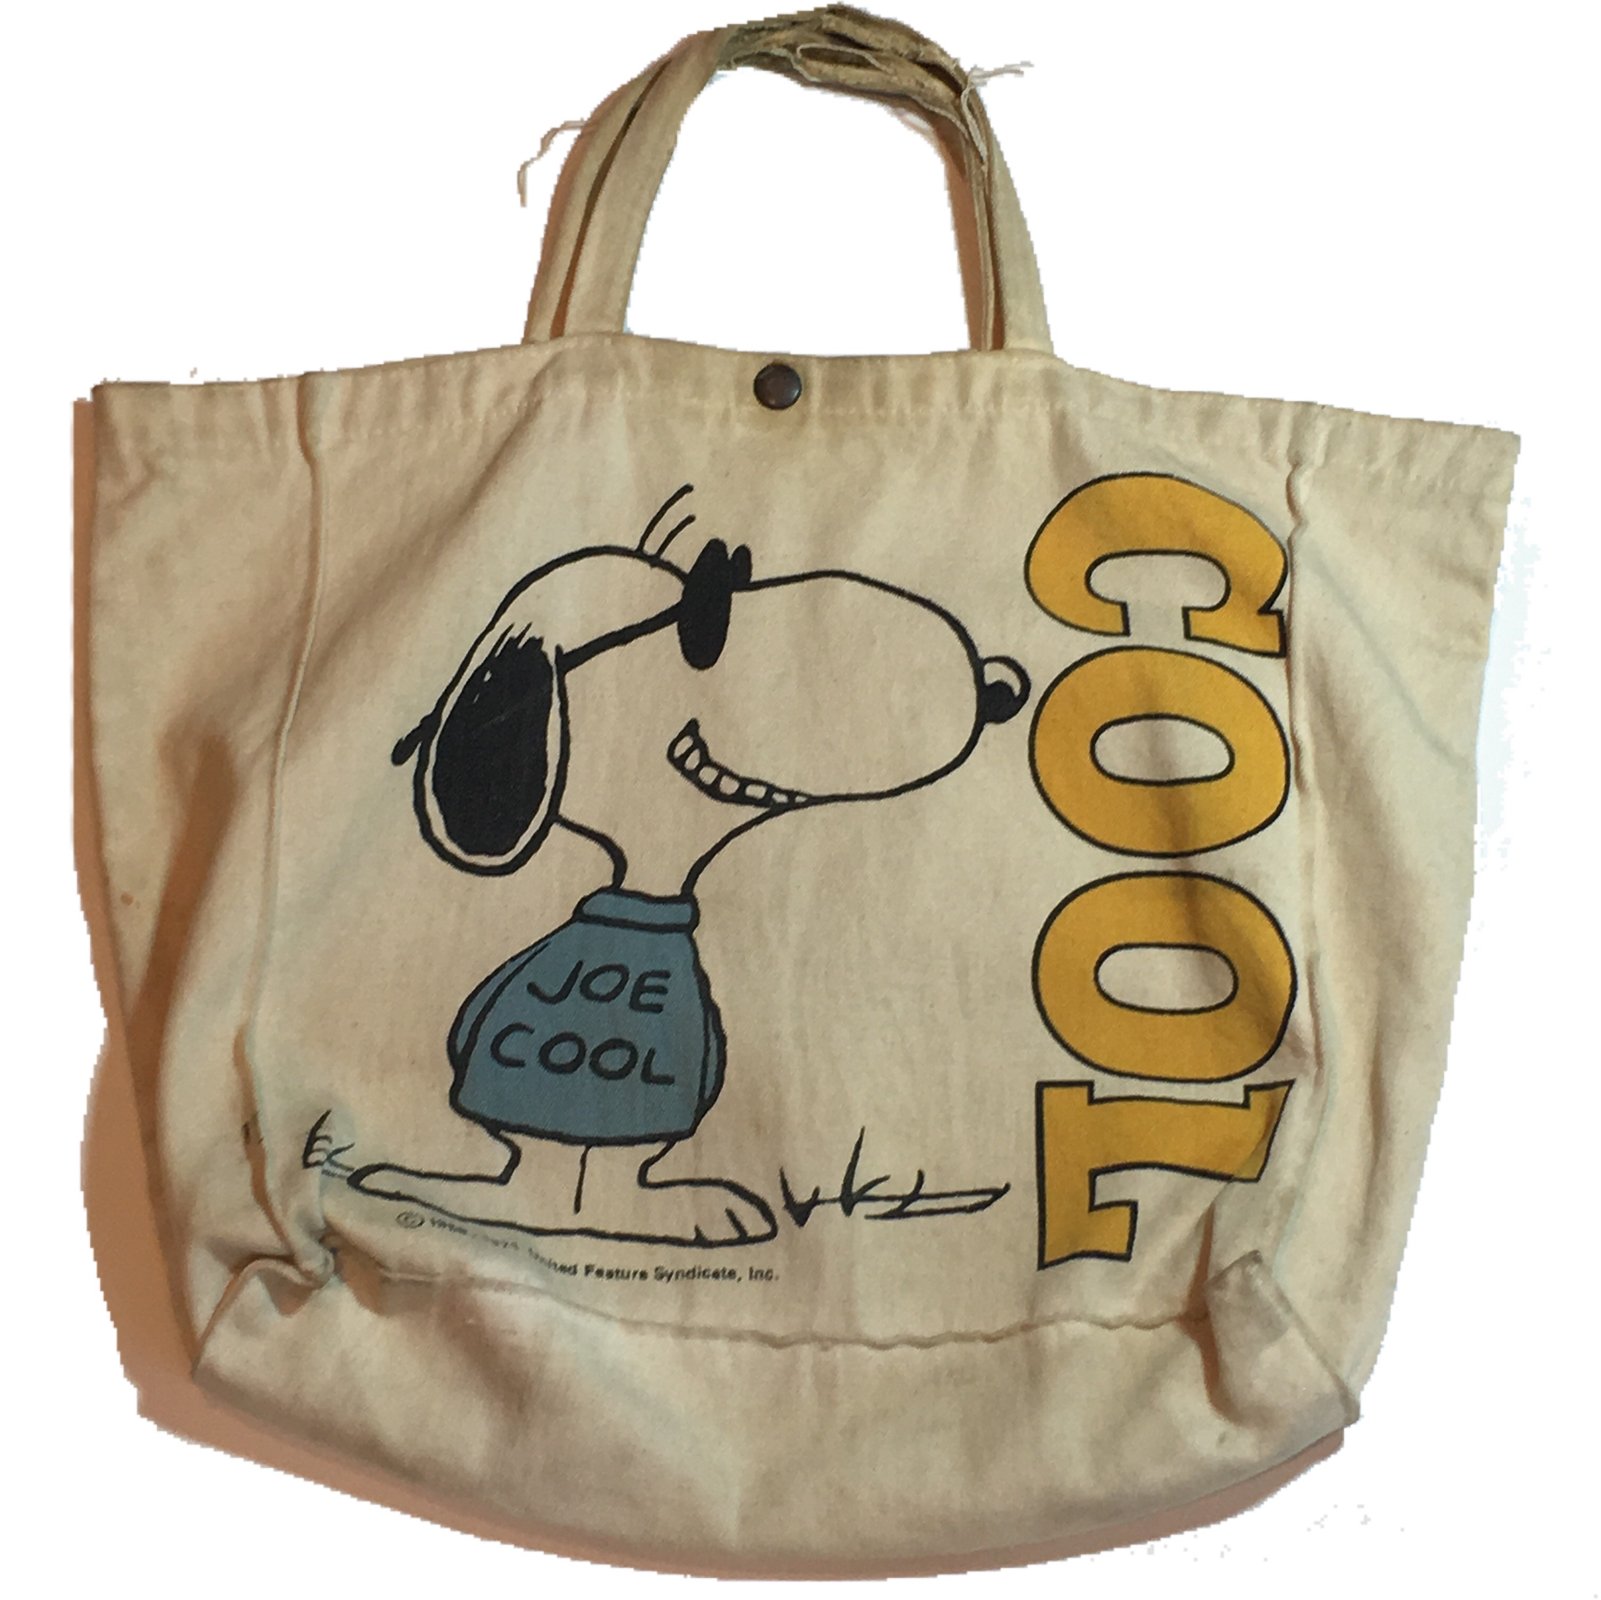 Image of Joe cool snoopy tote bag